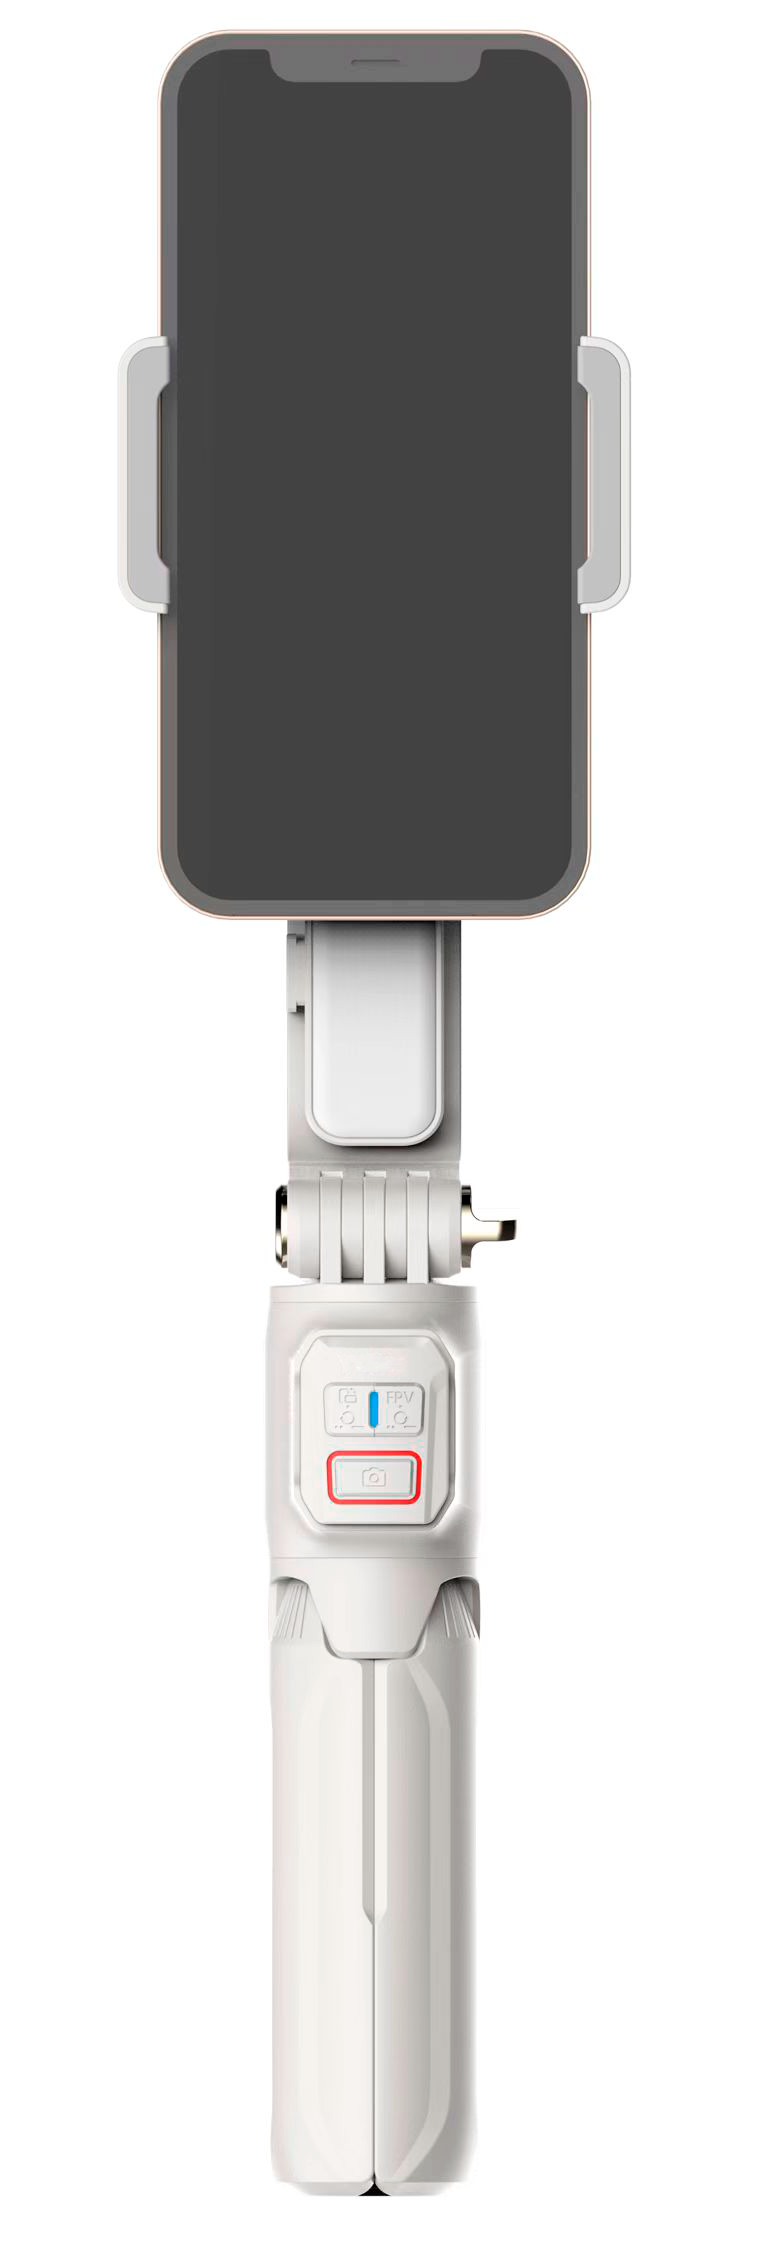 Стабилизатор для смартфона GimbalPro A10 White стабилизатор gimbalpro g8 white